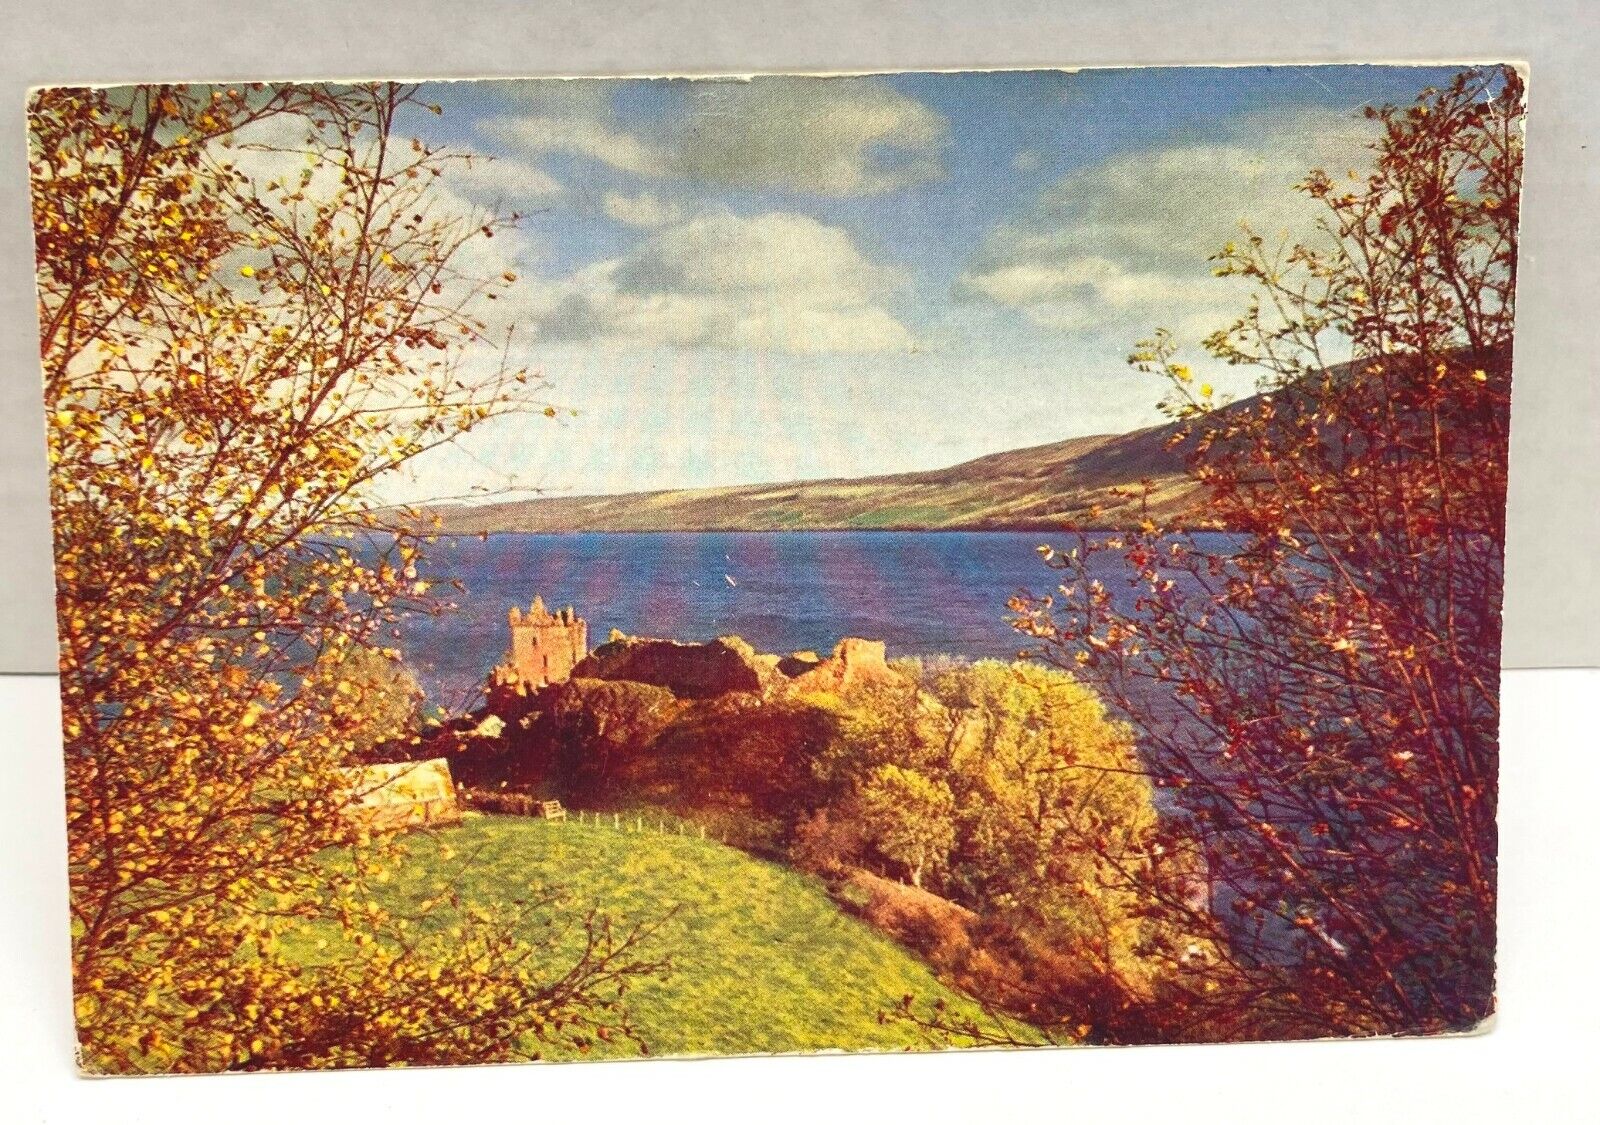 Urquhart Castle and Loch Ness Scotland Postcard Vintage Souvenir Posted 1960s